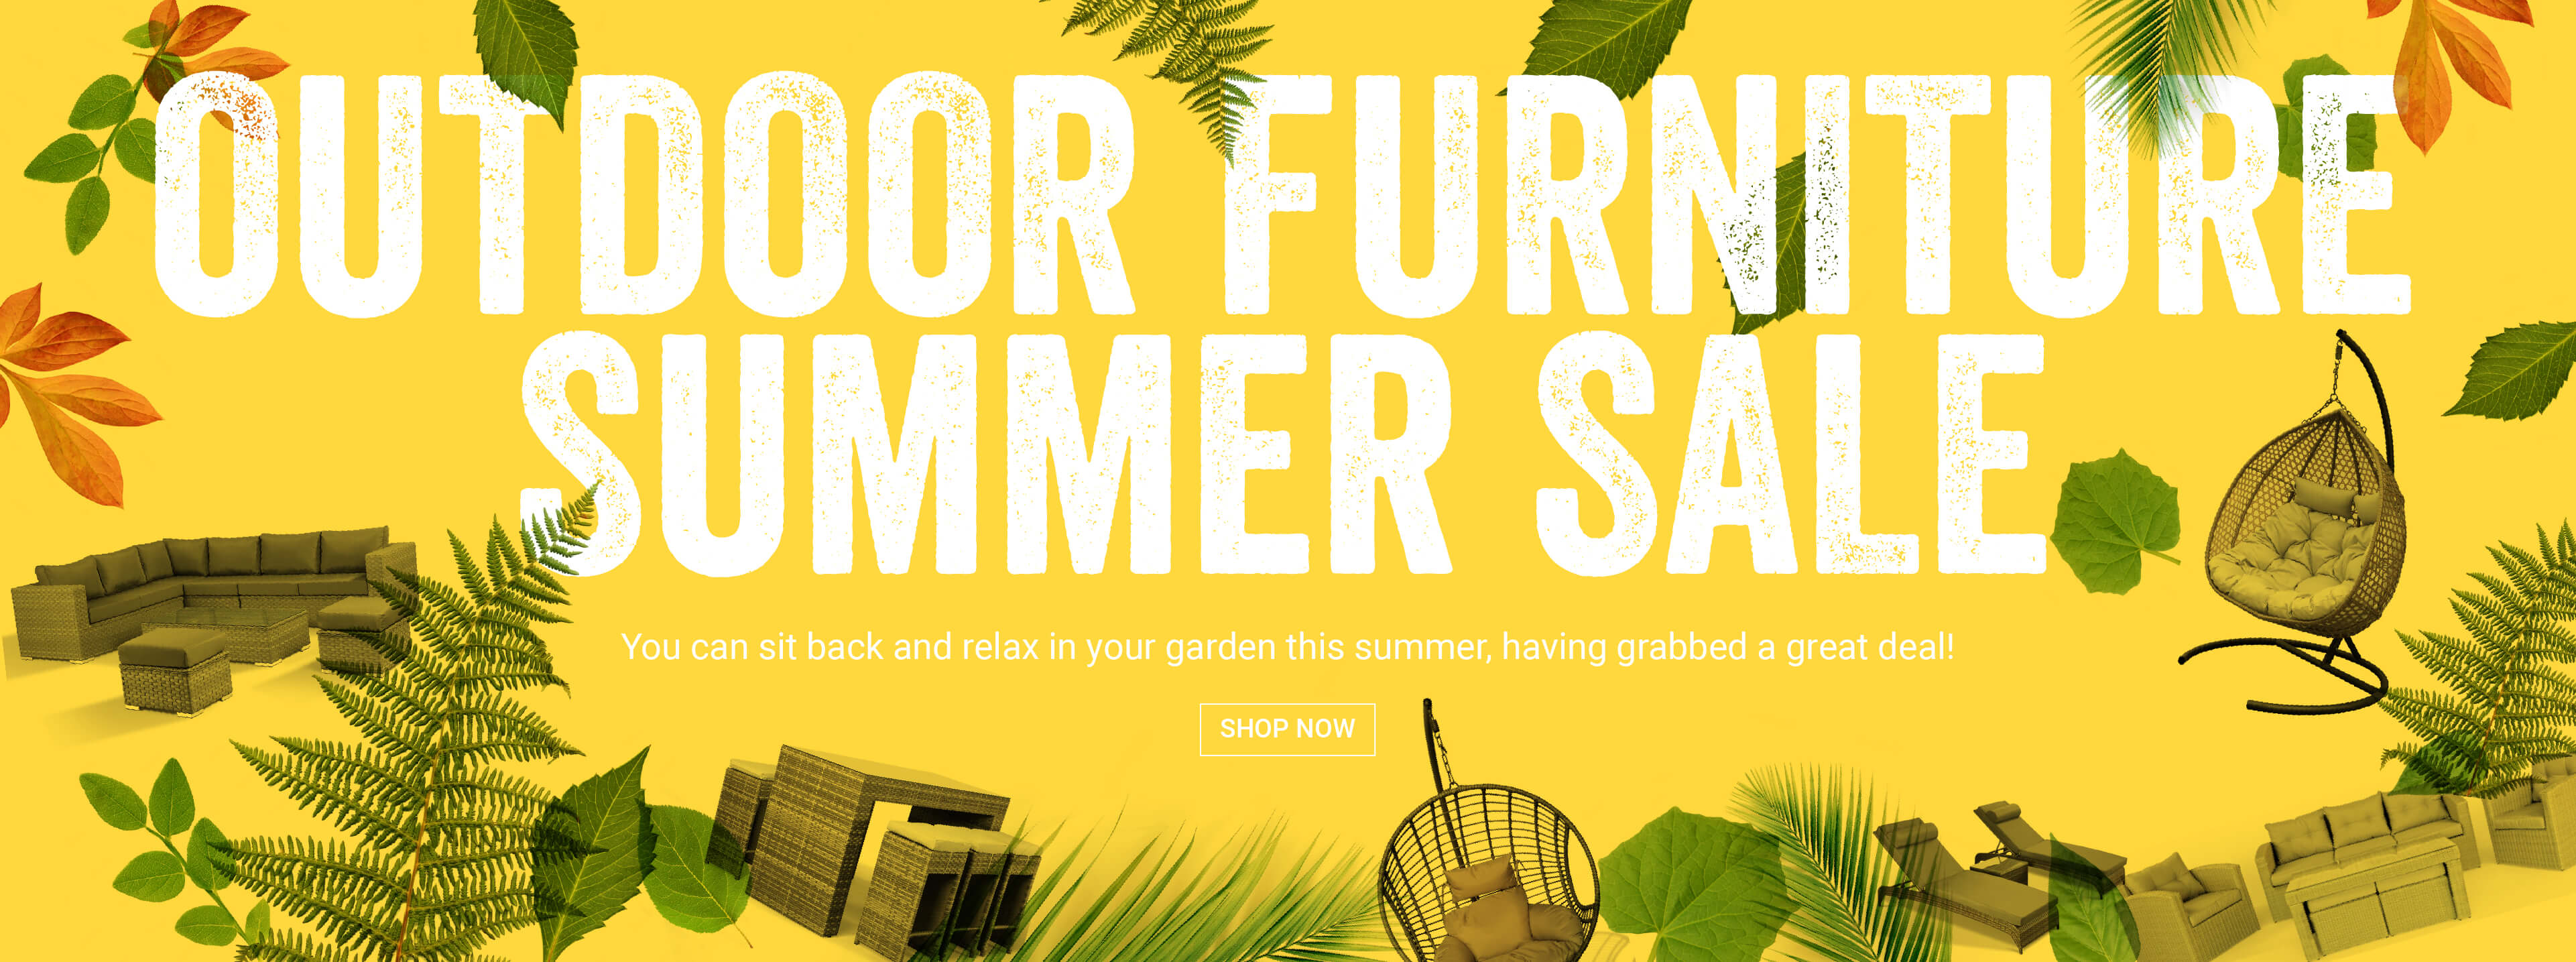 Outdoor Furniture Summer Sale